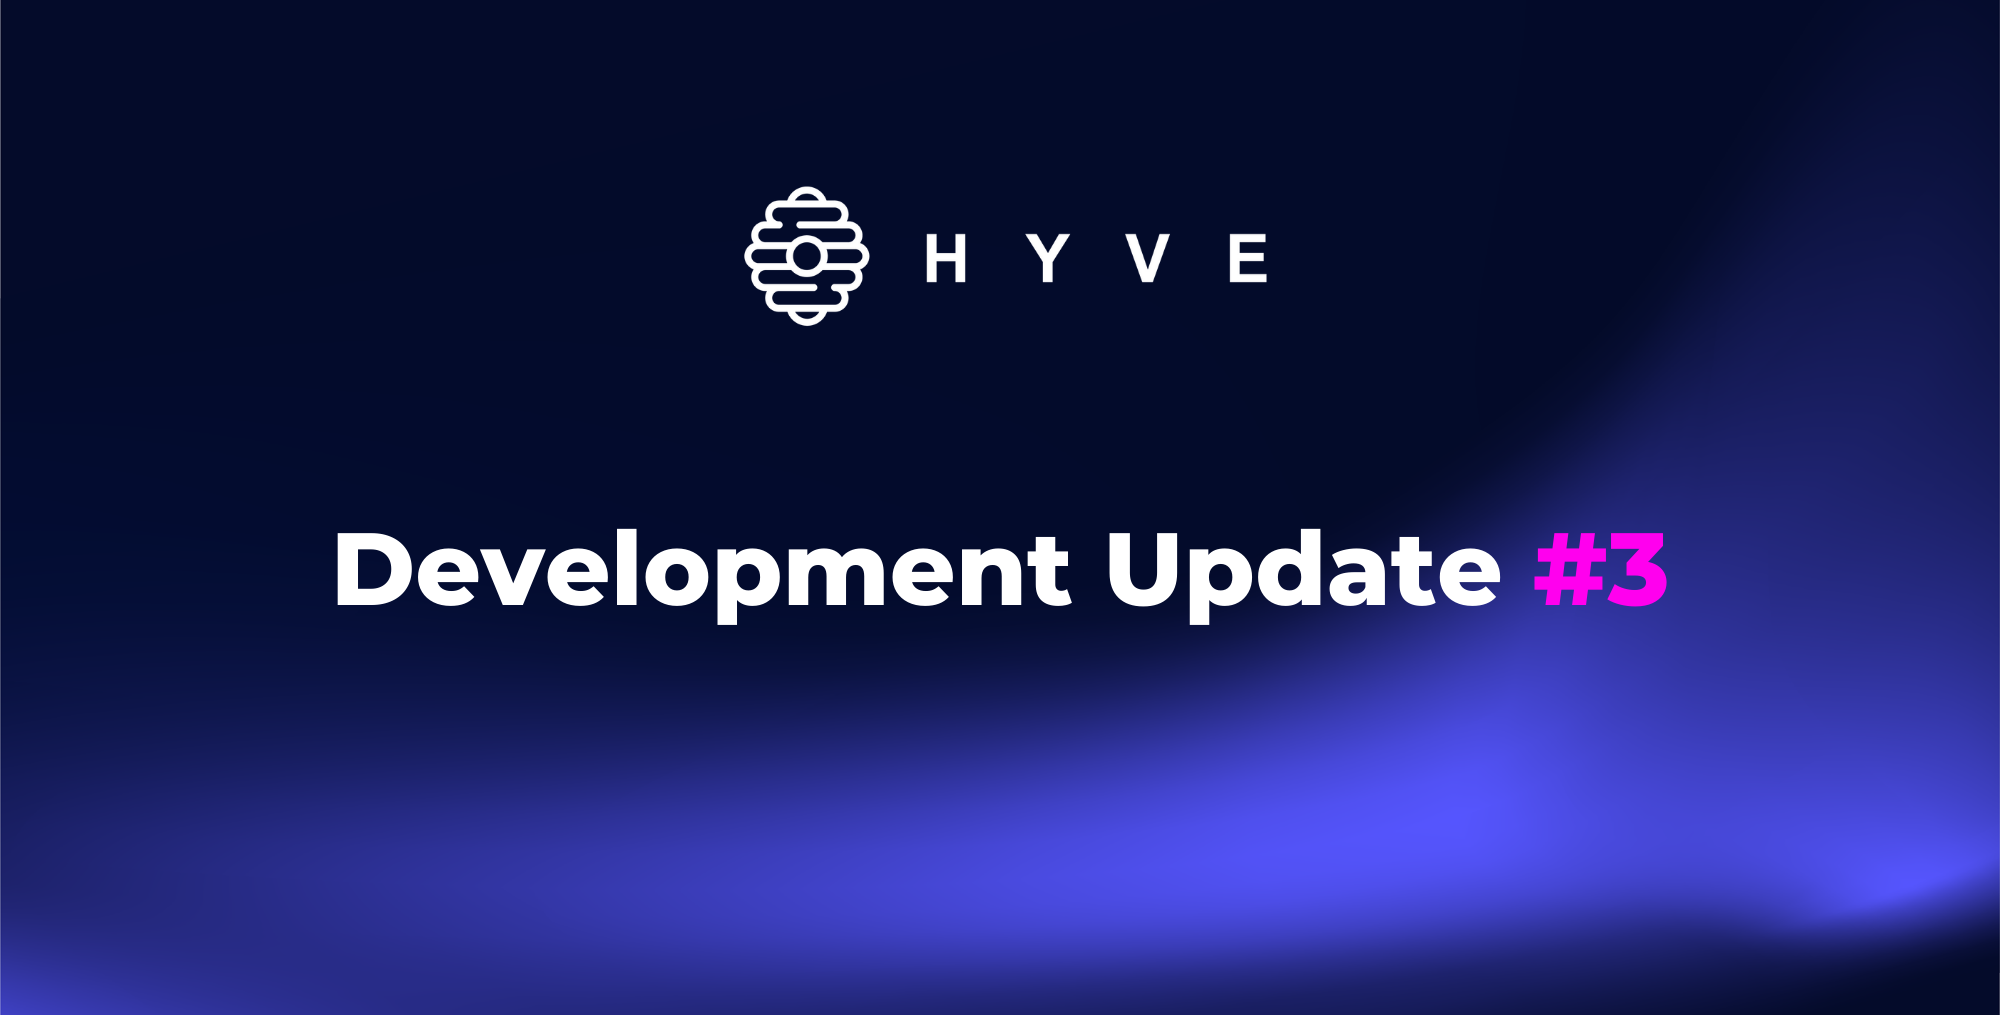 Development Update #3